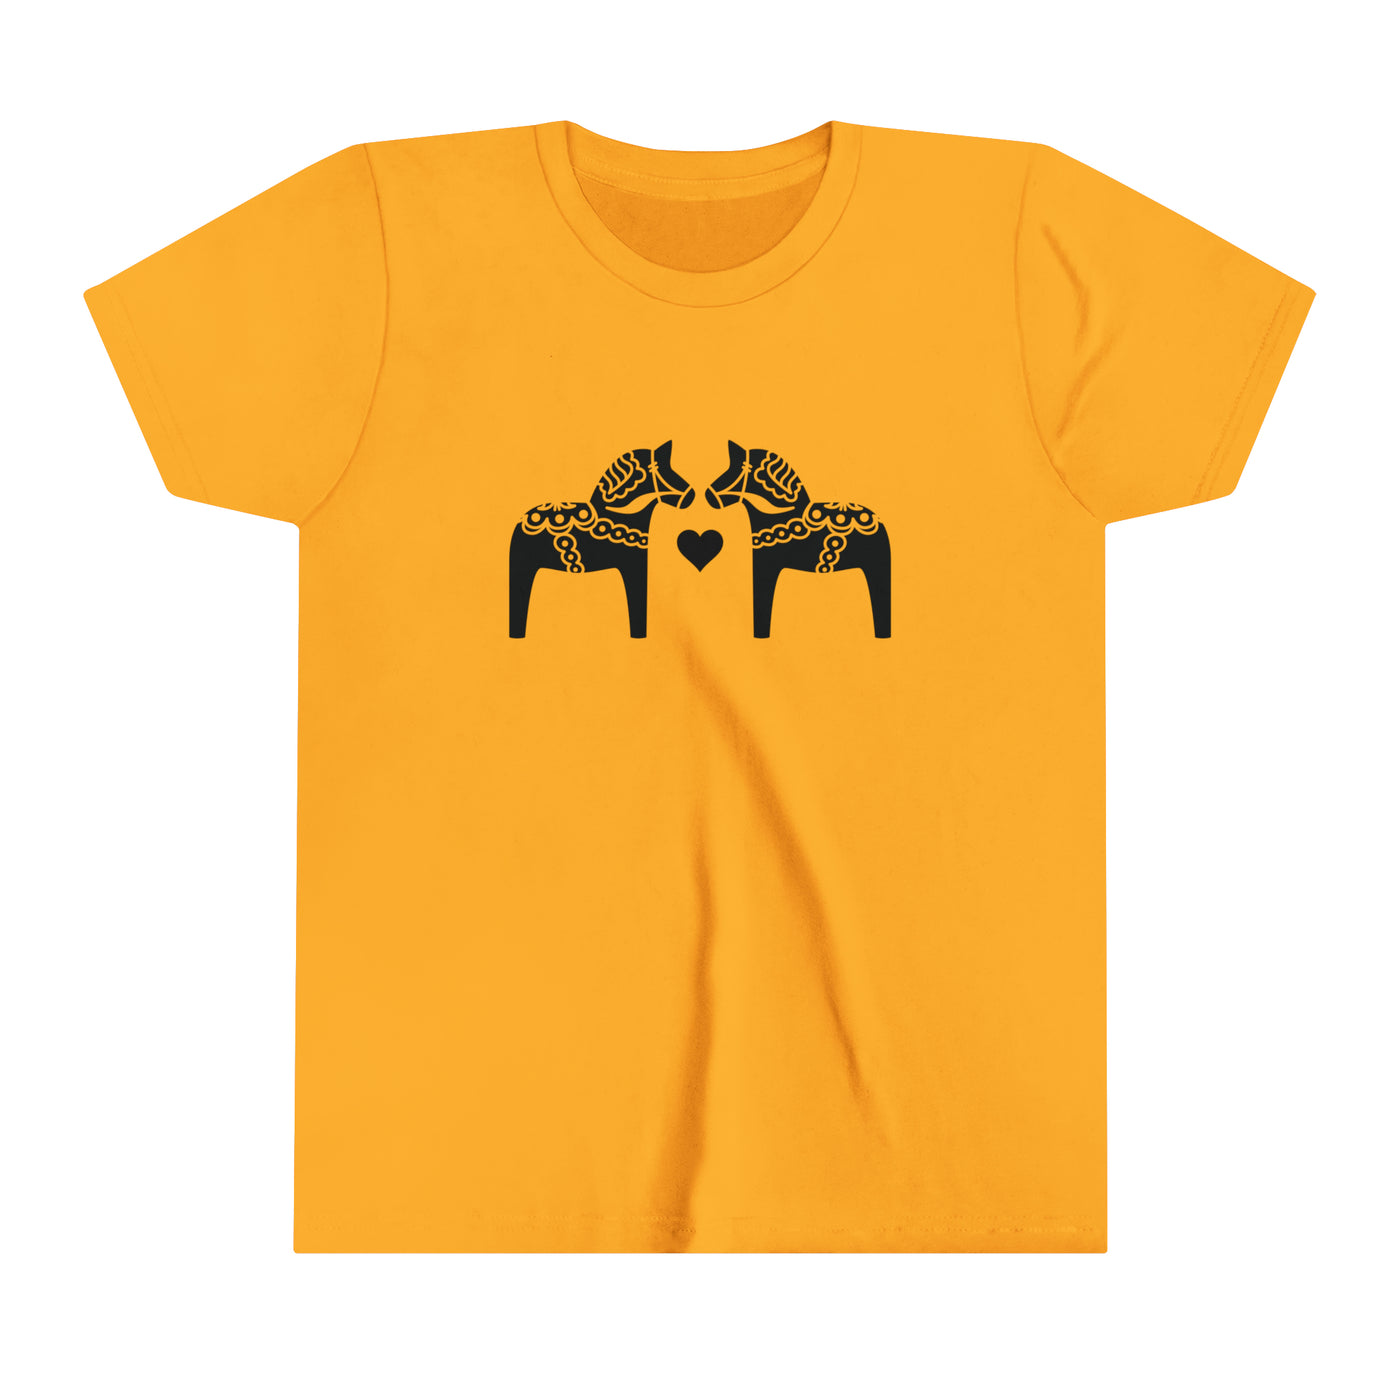 Dala Horse Kids T-Shirt